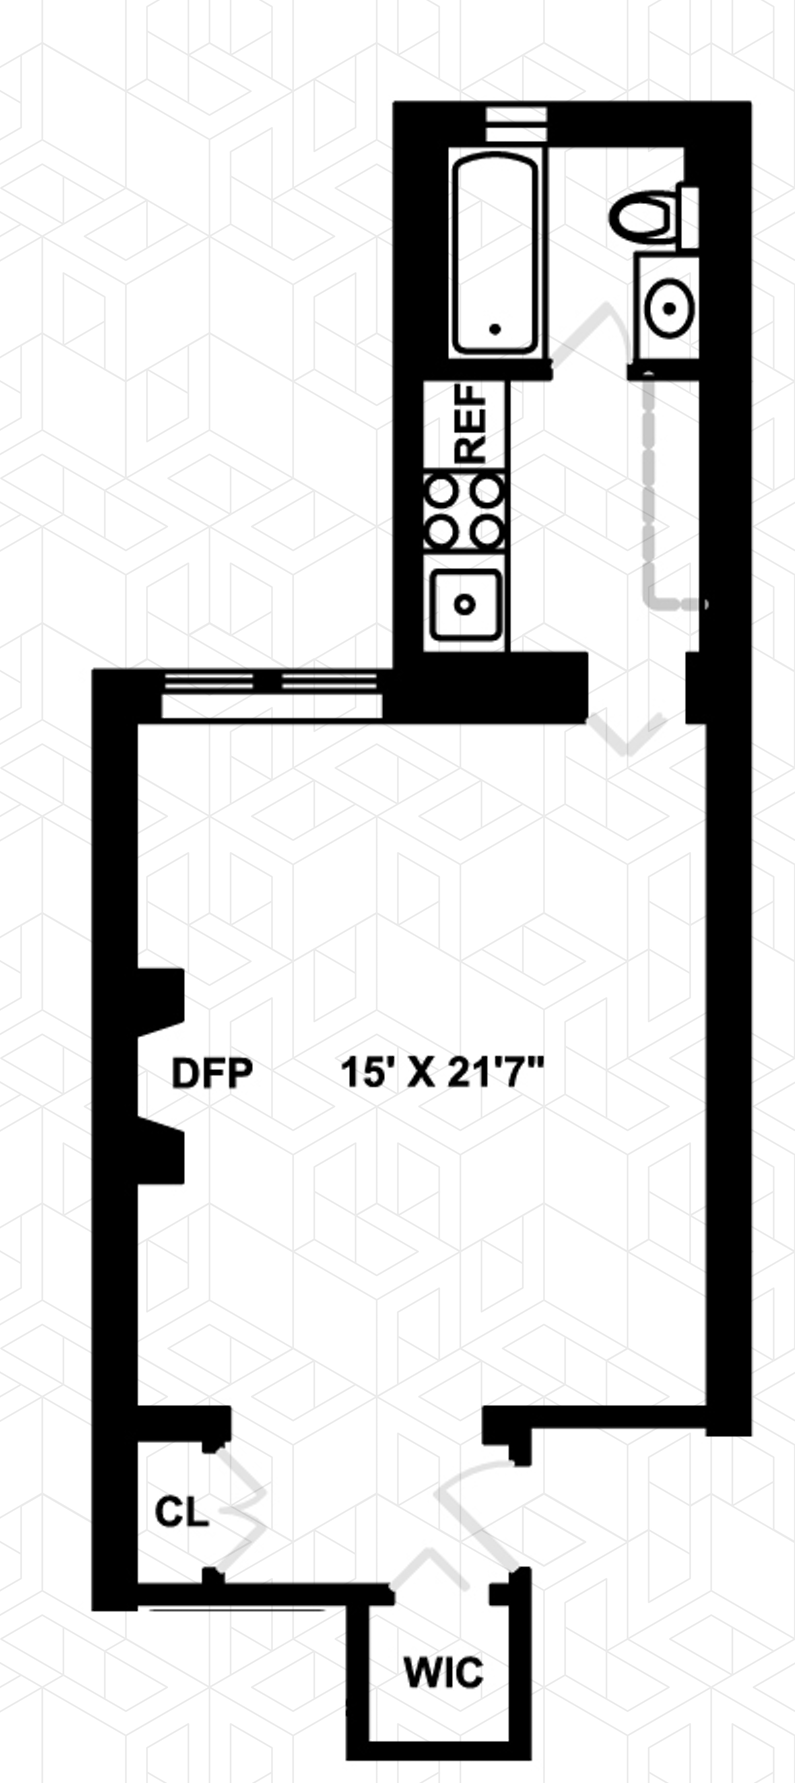 Floorplan for 123 West 78th Street